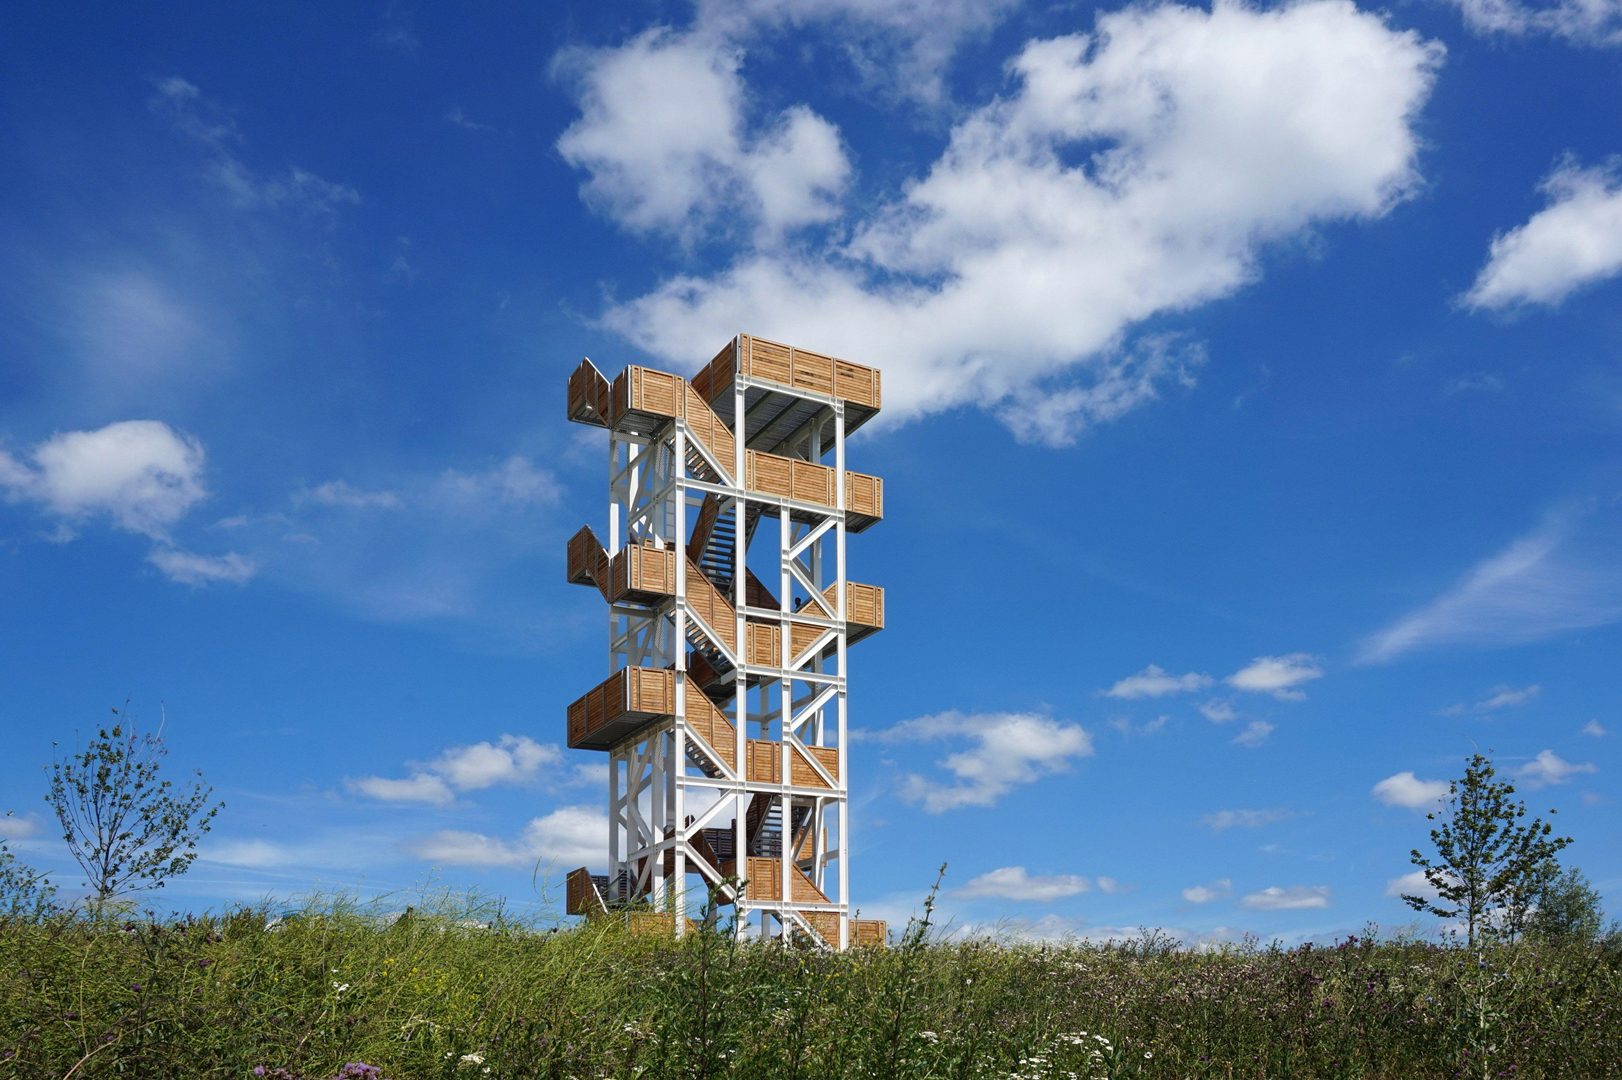   Uitkijktoren Hoge Bergse Bos